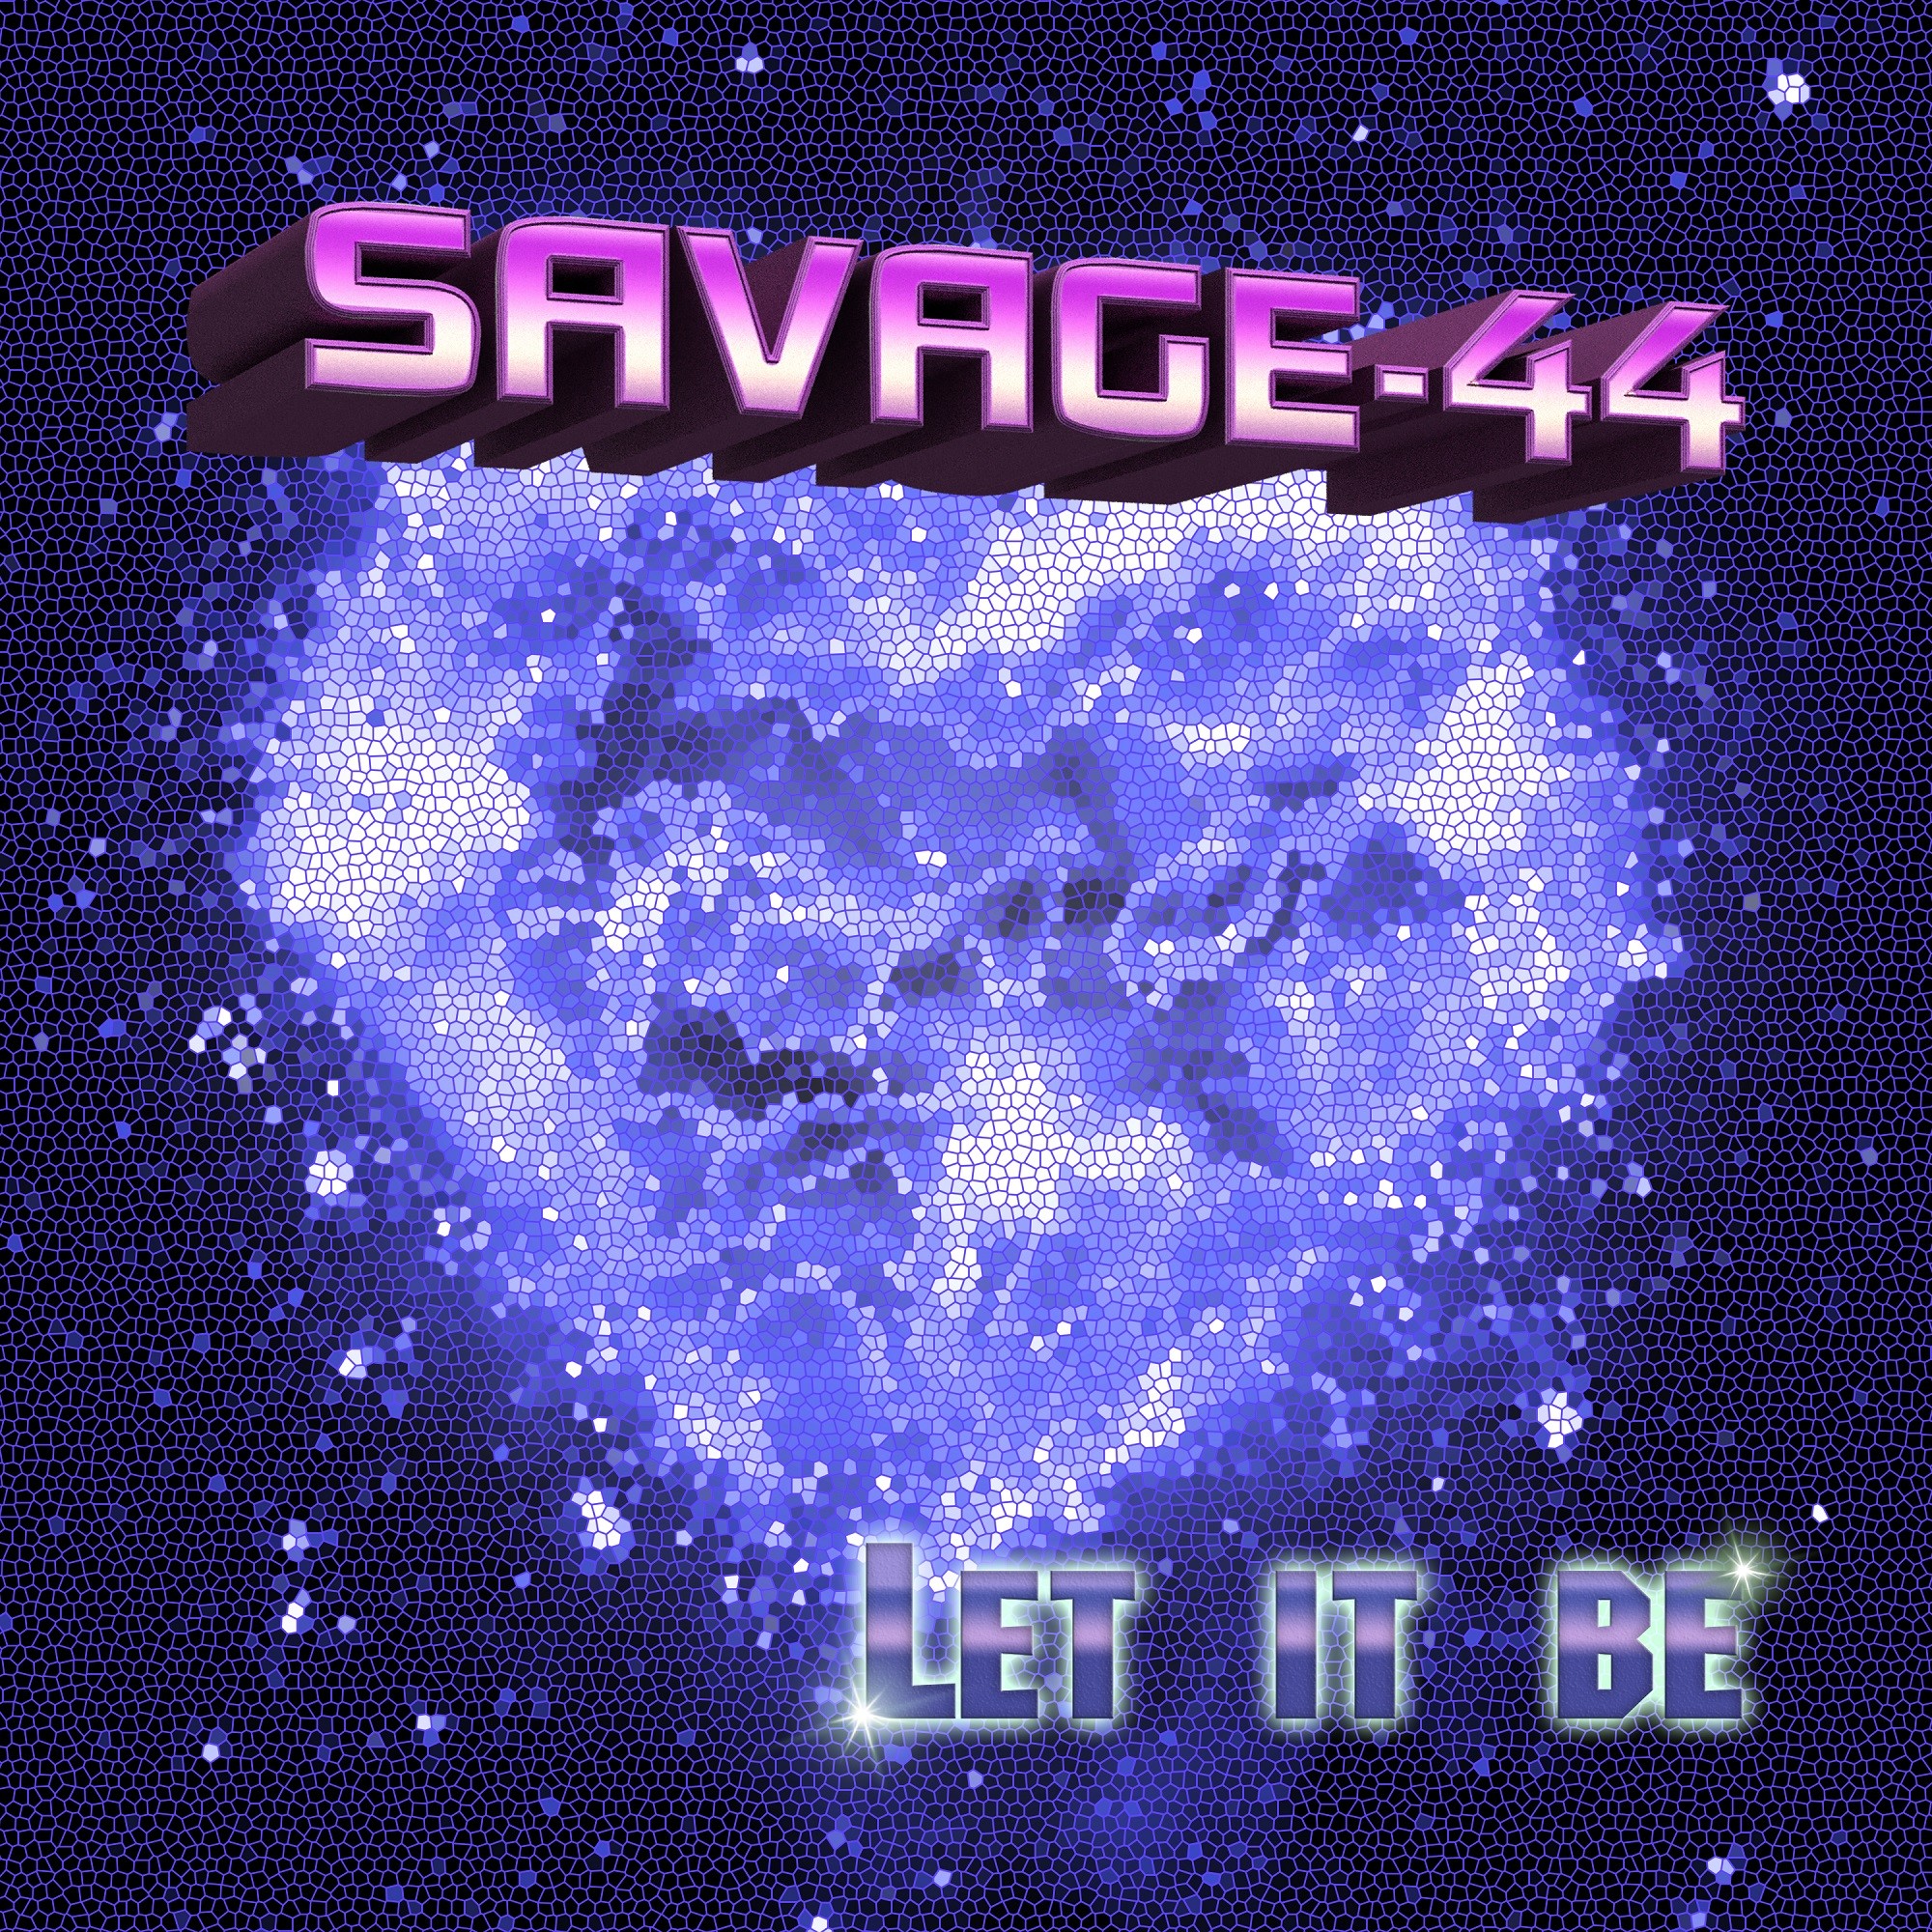 Savage 44 the music ring. Savage-44 слушать. A been Savage. Savage-44 - only Love (Radio Version 2020).